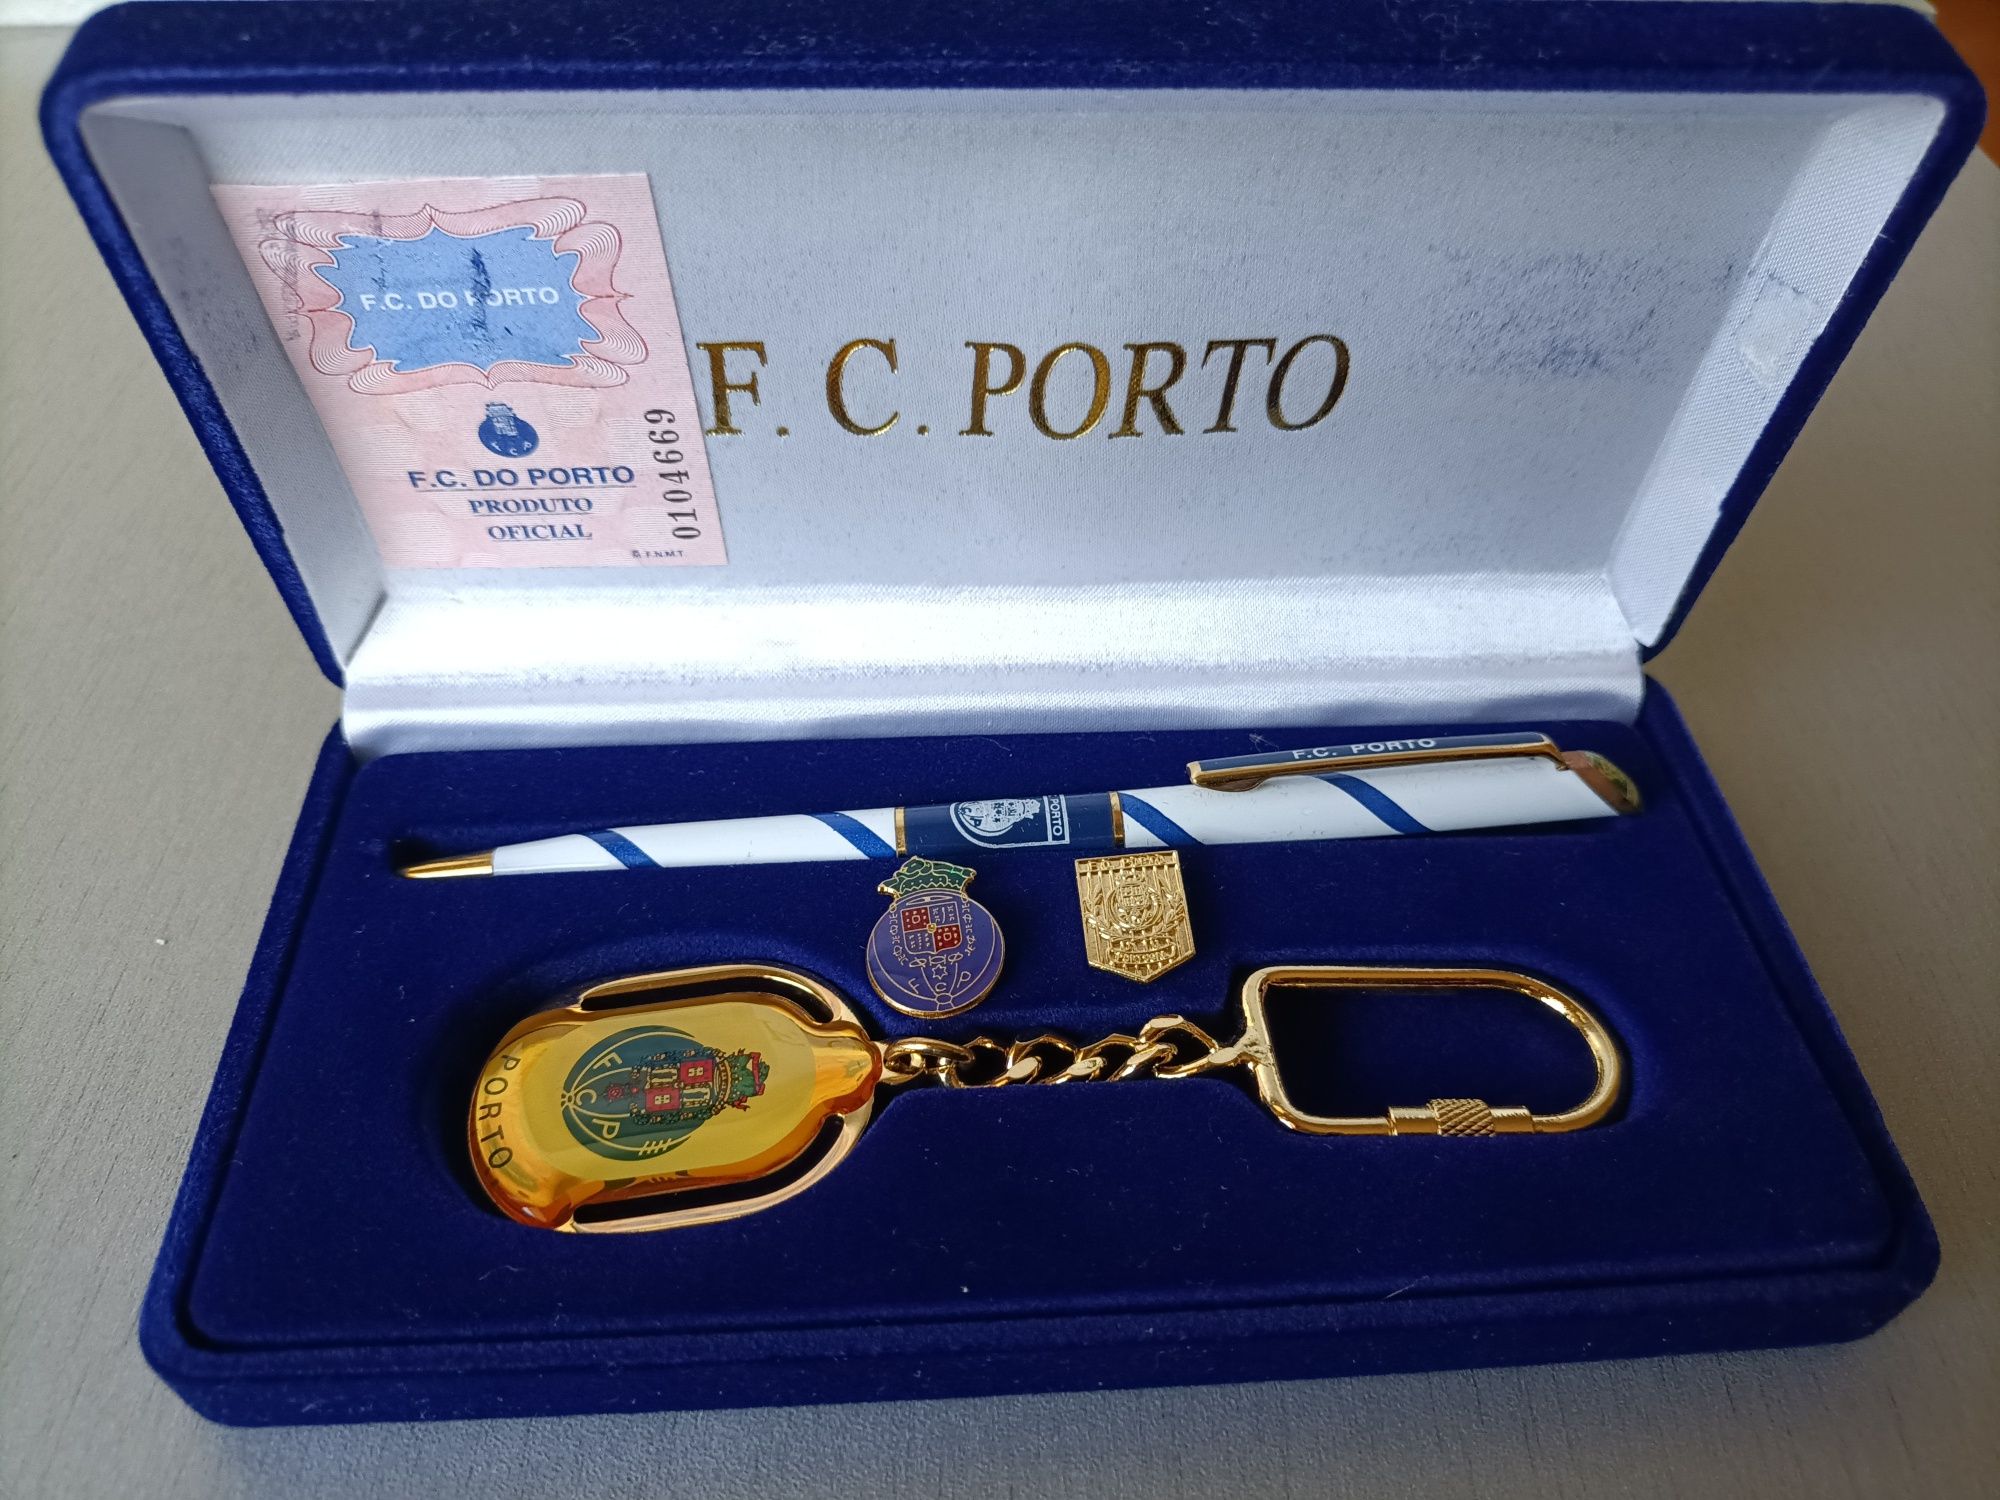 Conjunto de esferográfica, porta-chaves e dois crachás do F.C.Porto